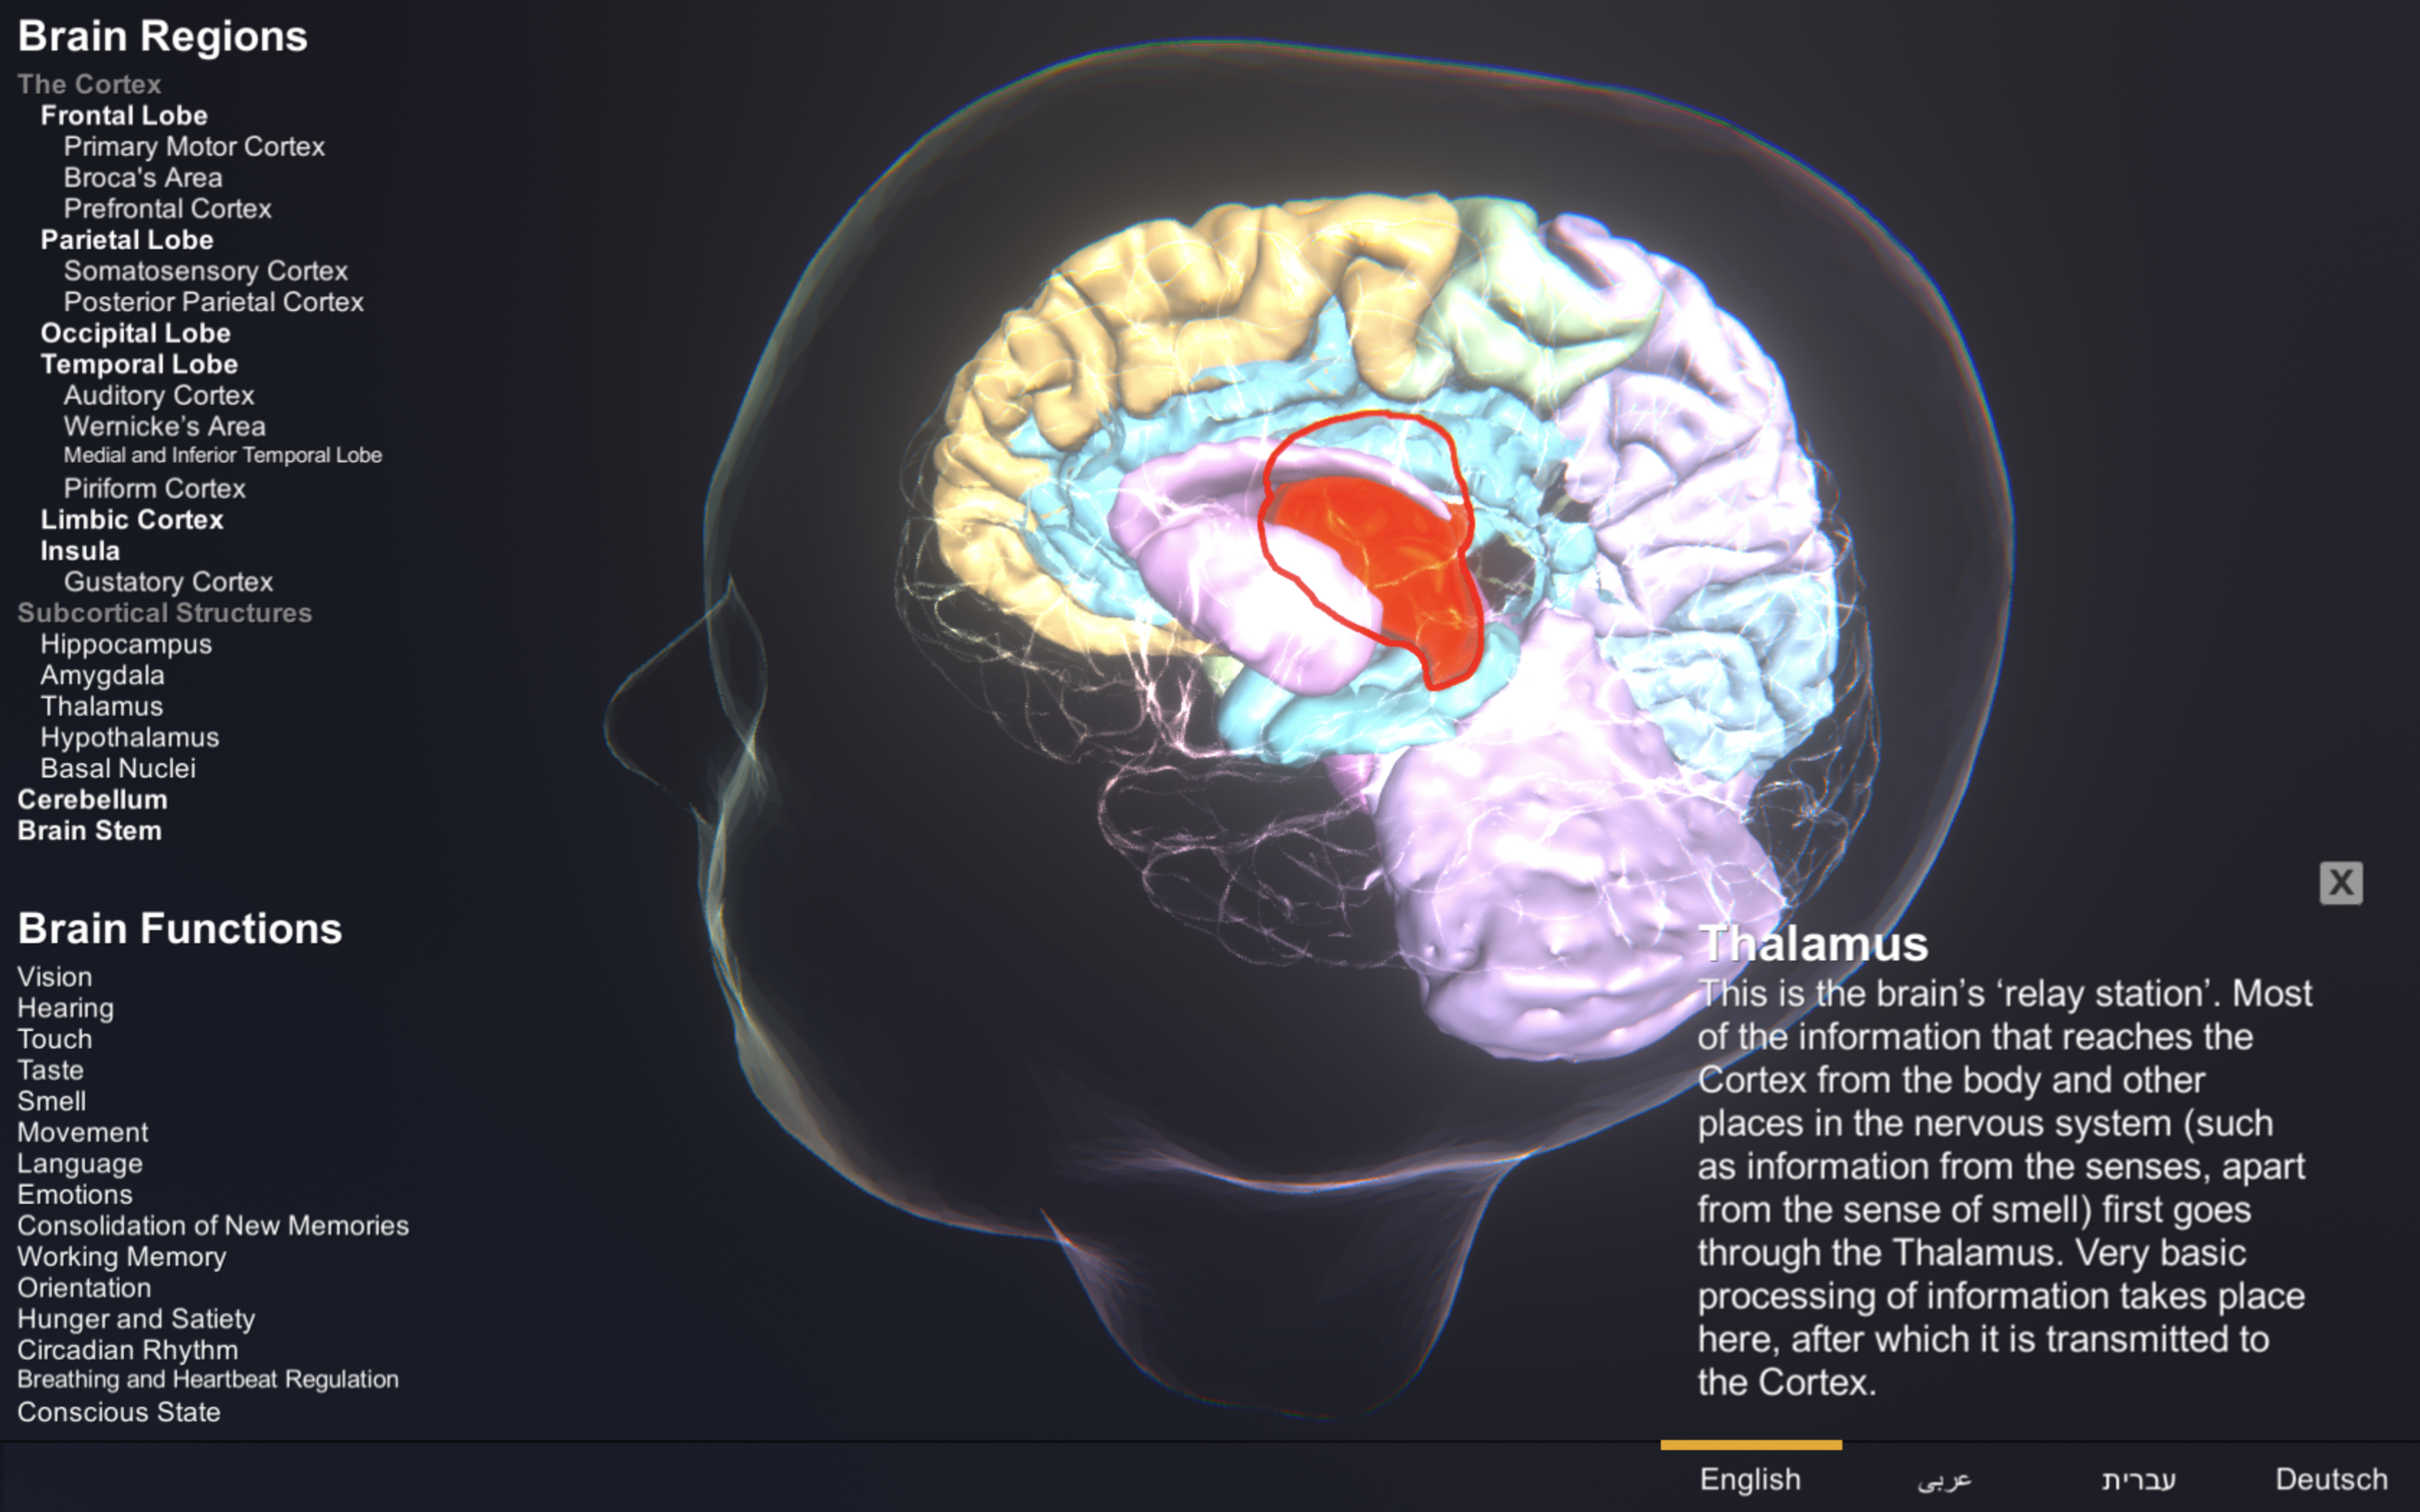 Screenshot of the interactive Brain Atlas